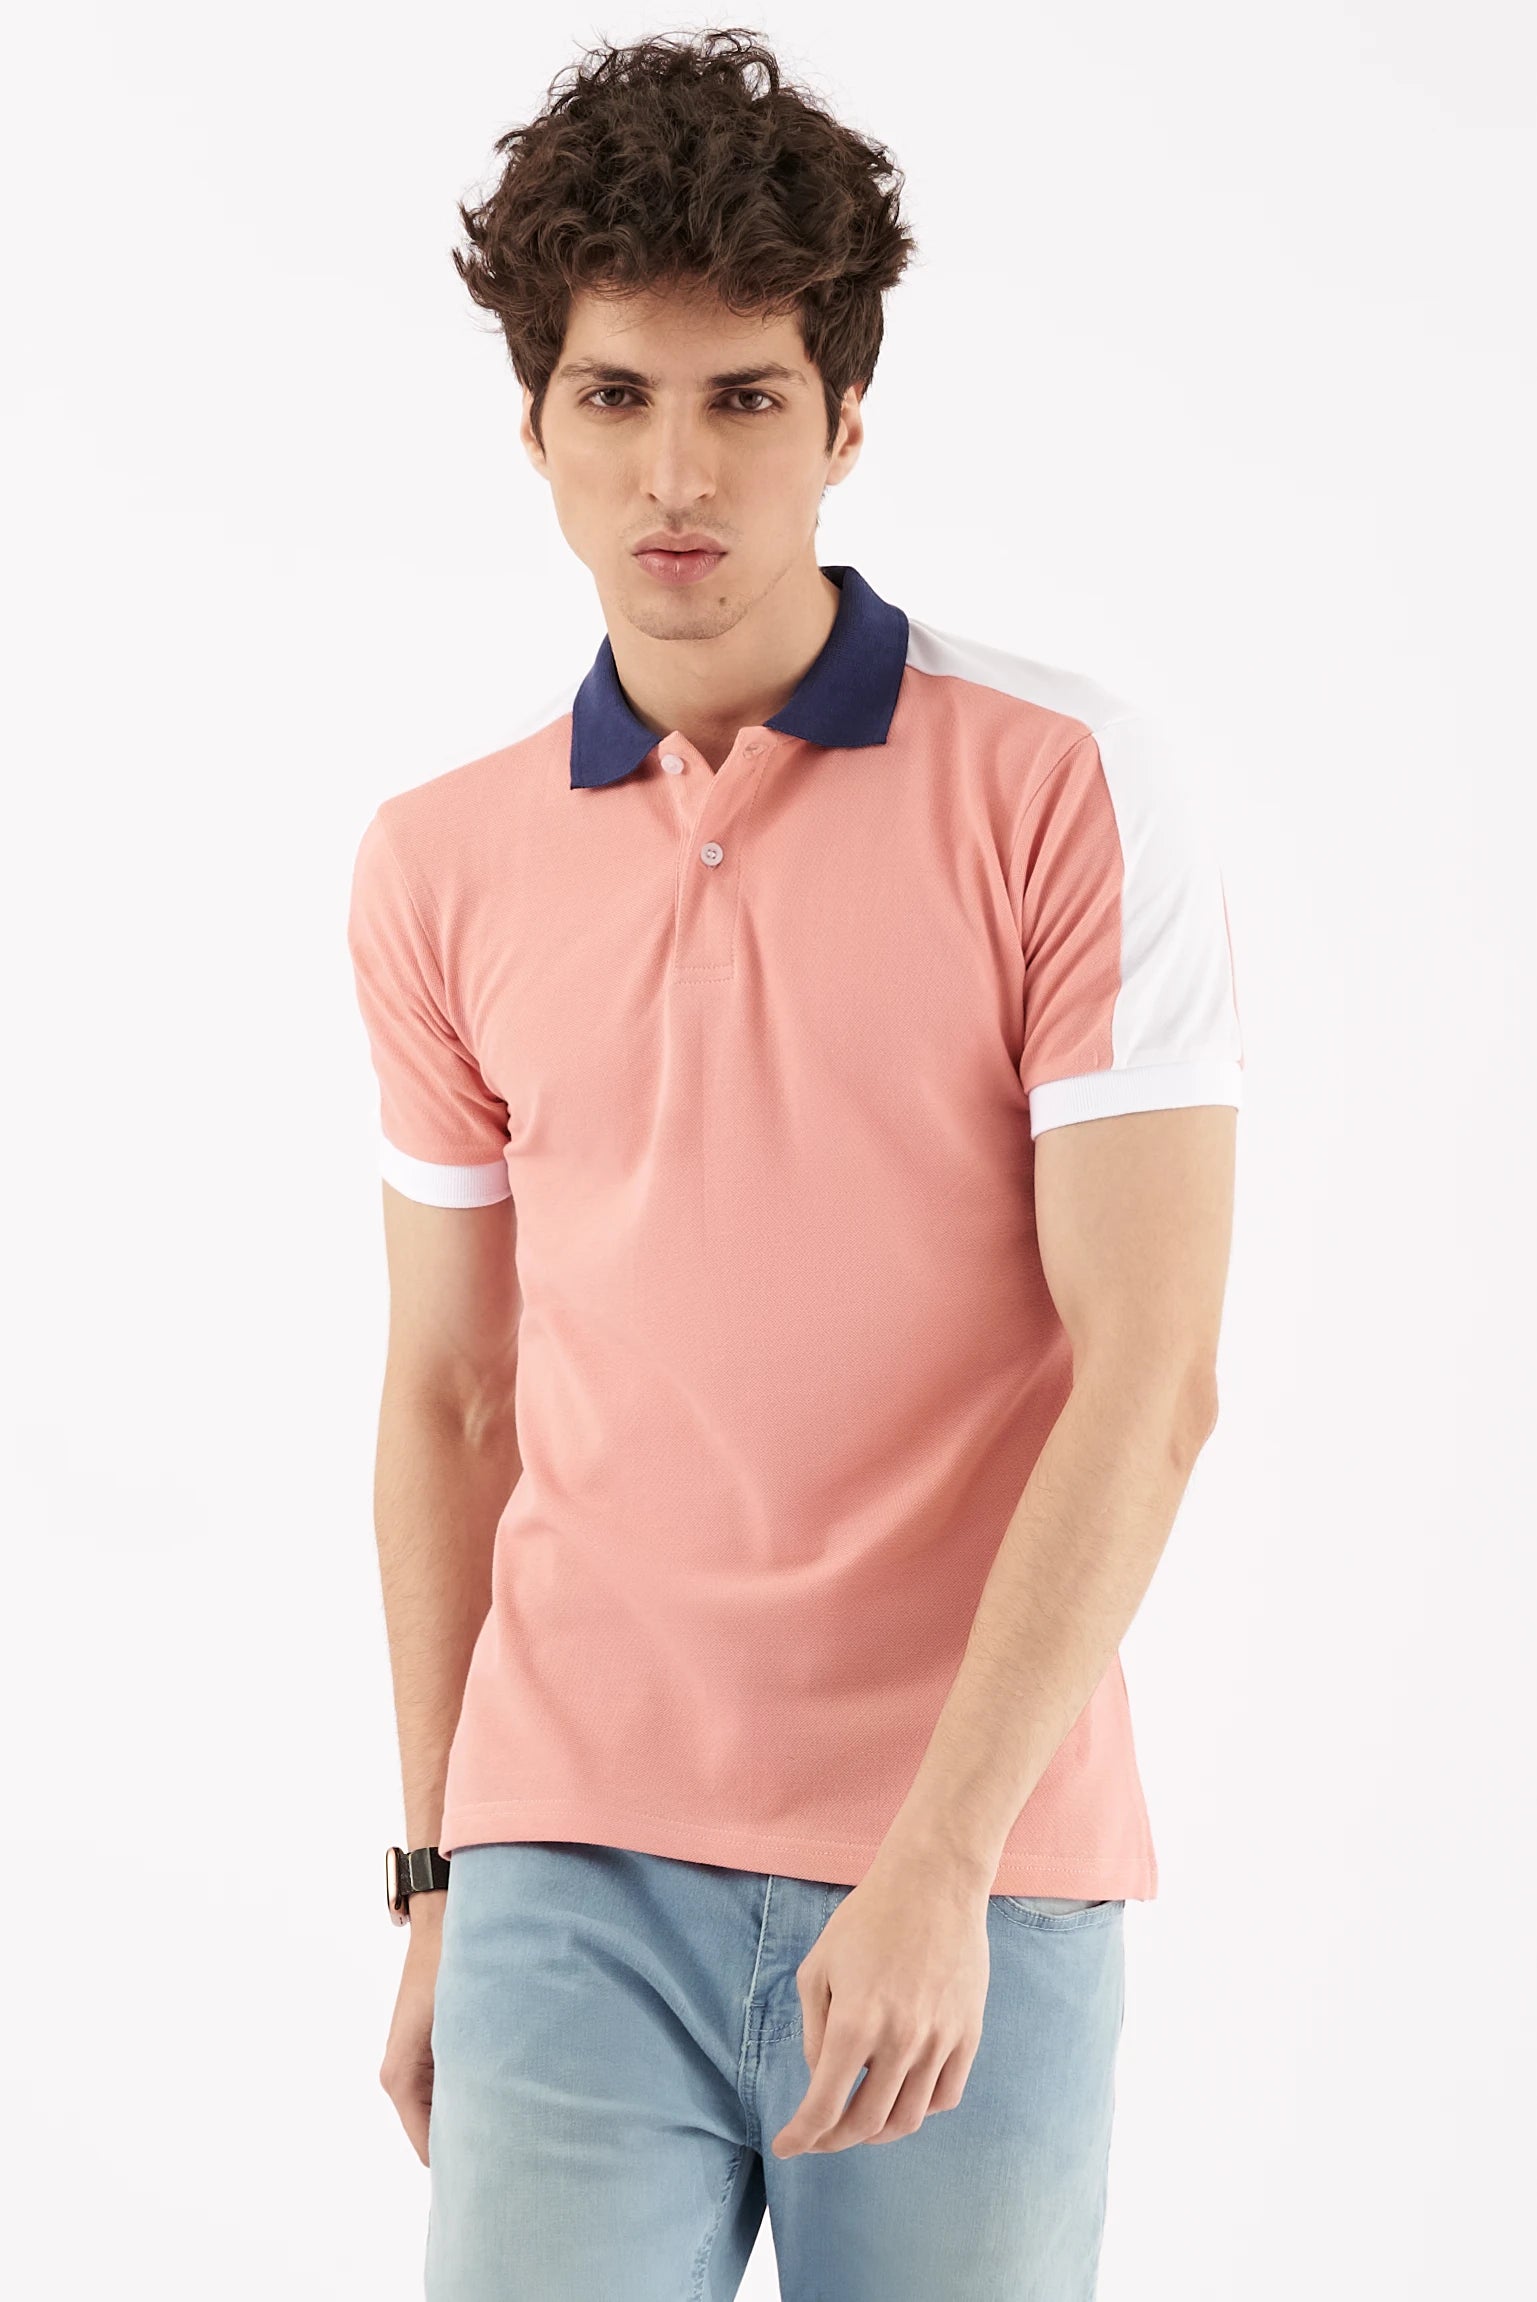 Men's Performance Polo Shirt Pink